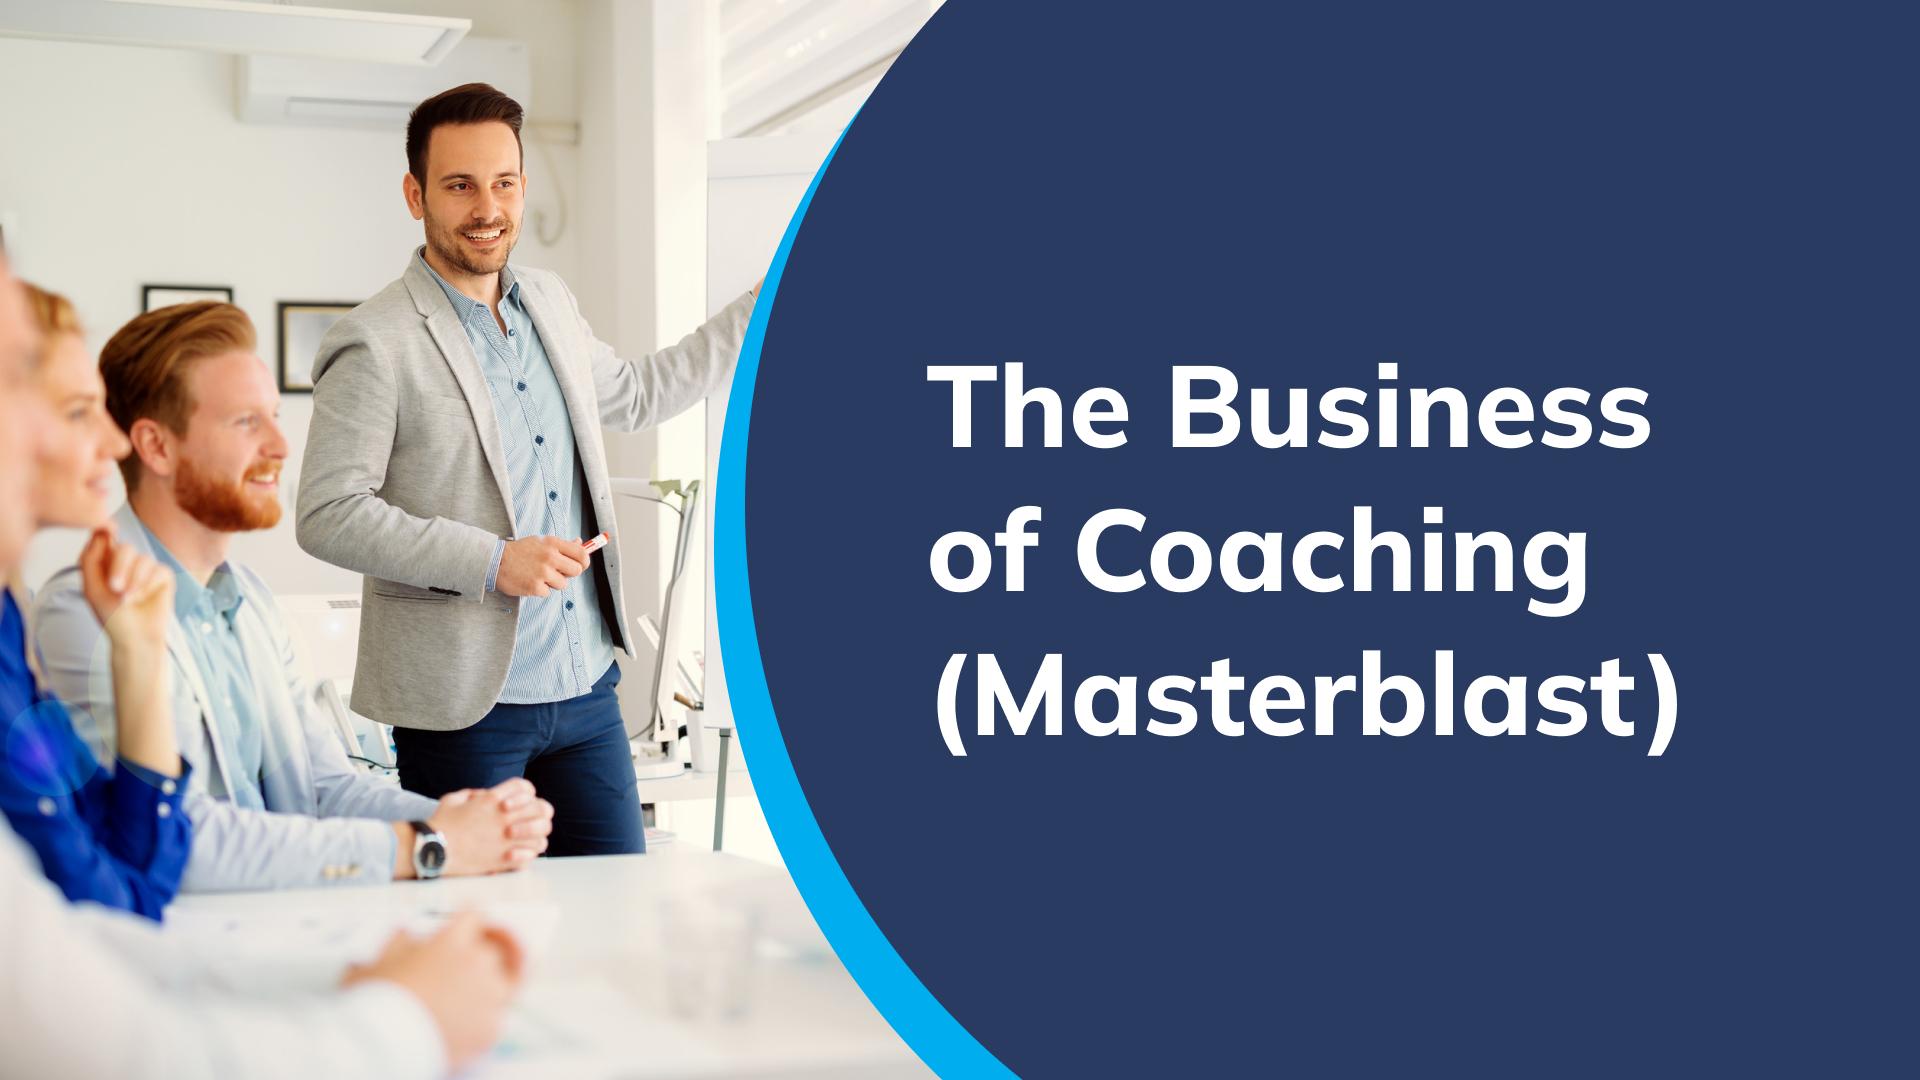 The Business of Coaching - Masterblast